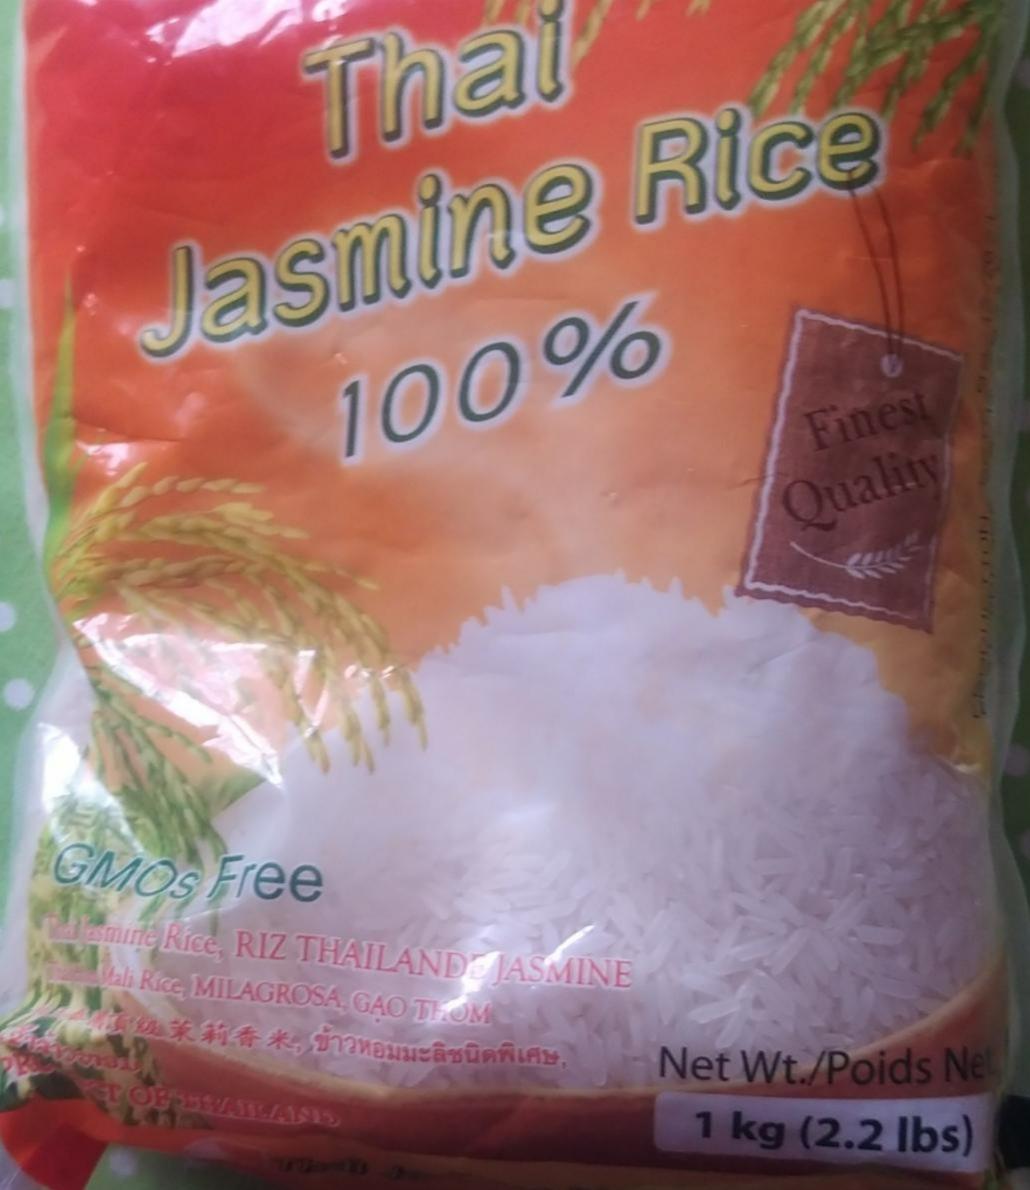 Fotografie - Thai jasmine rice 100% Golden Coral